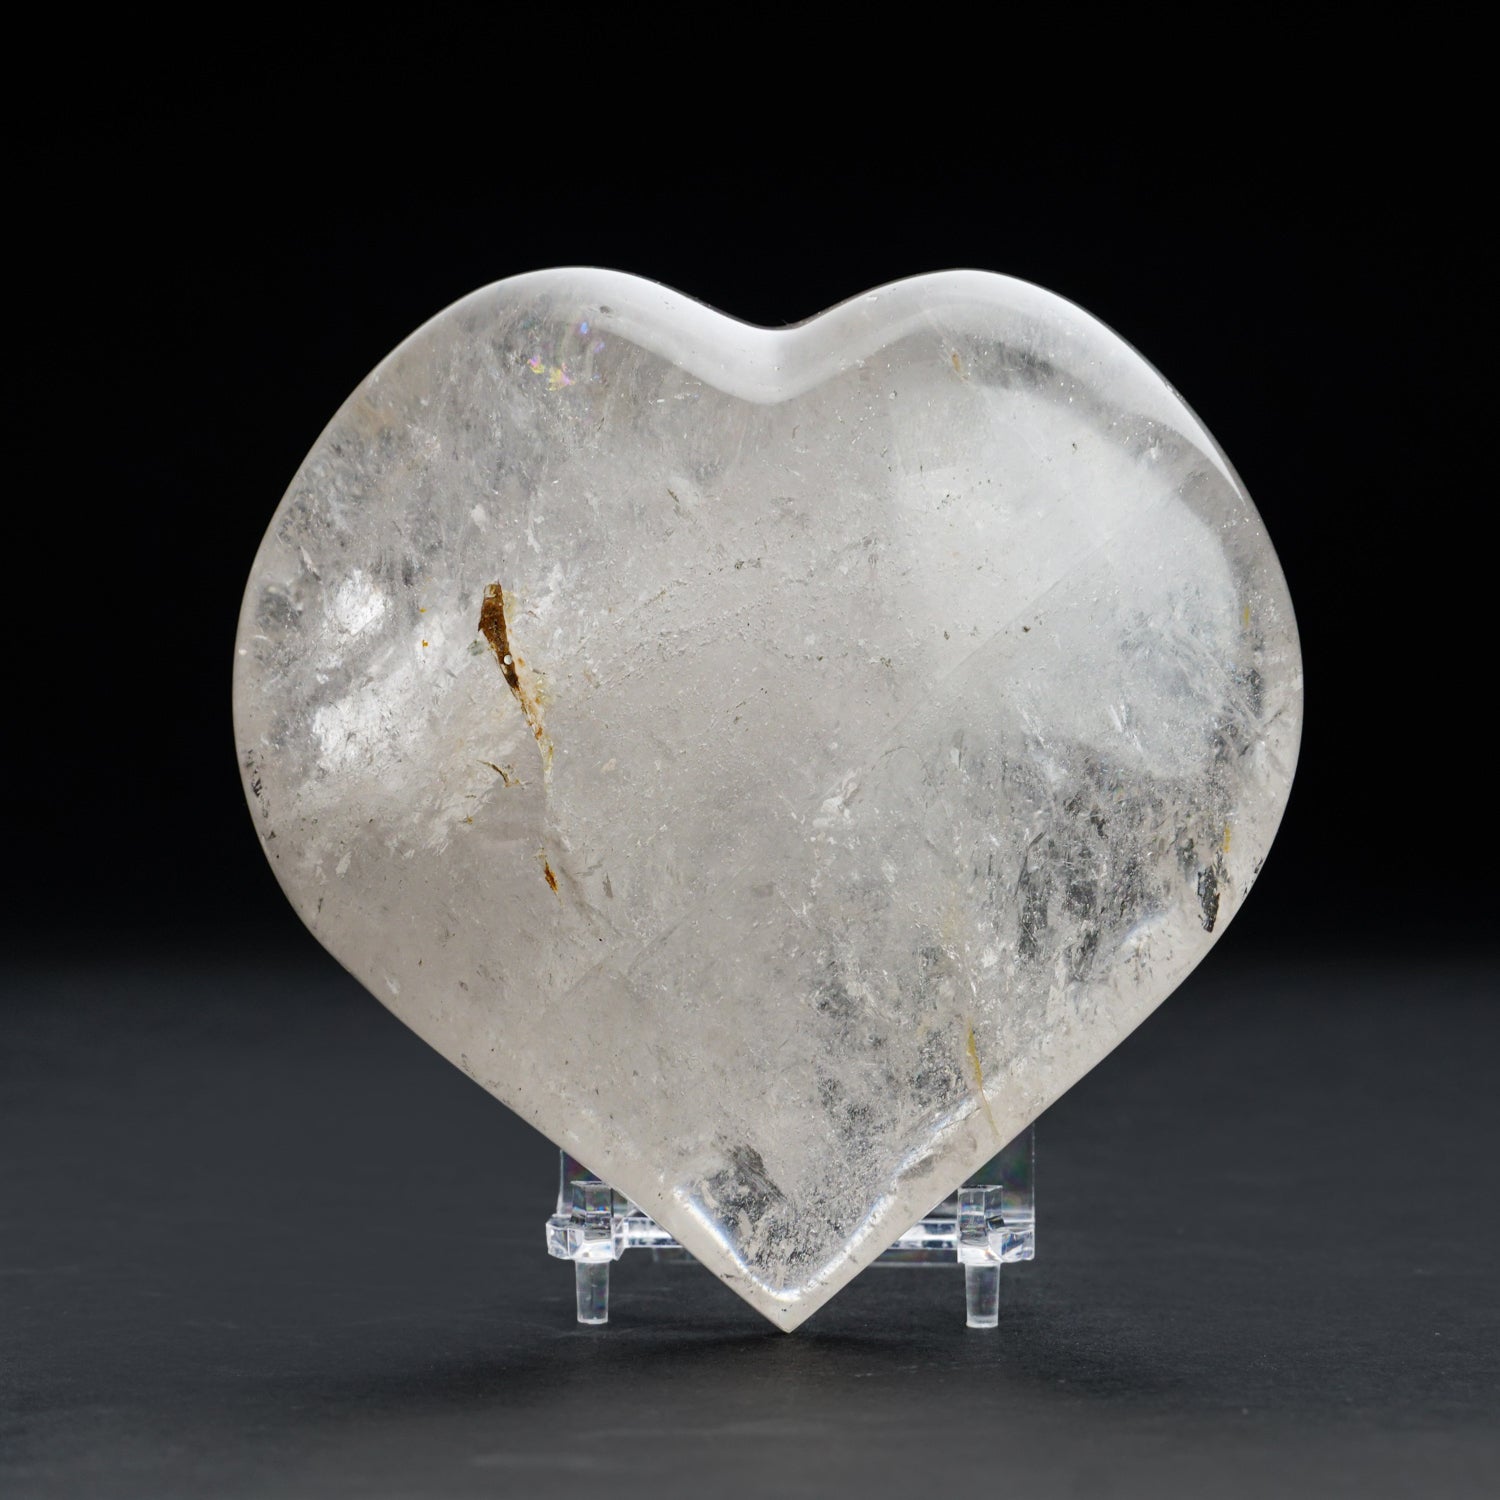 Genuine Polished Clear Quartz Heart From Brazil (1.8 lbs)